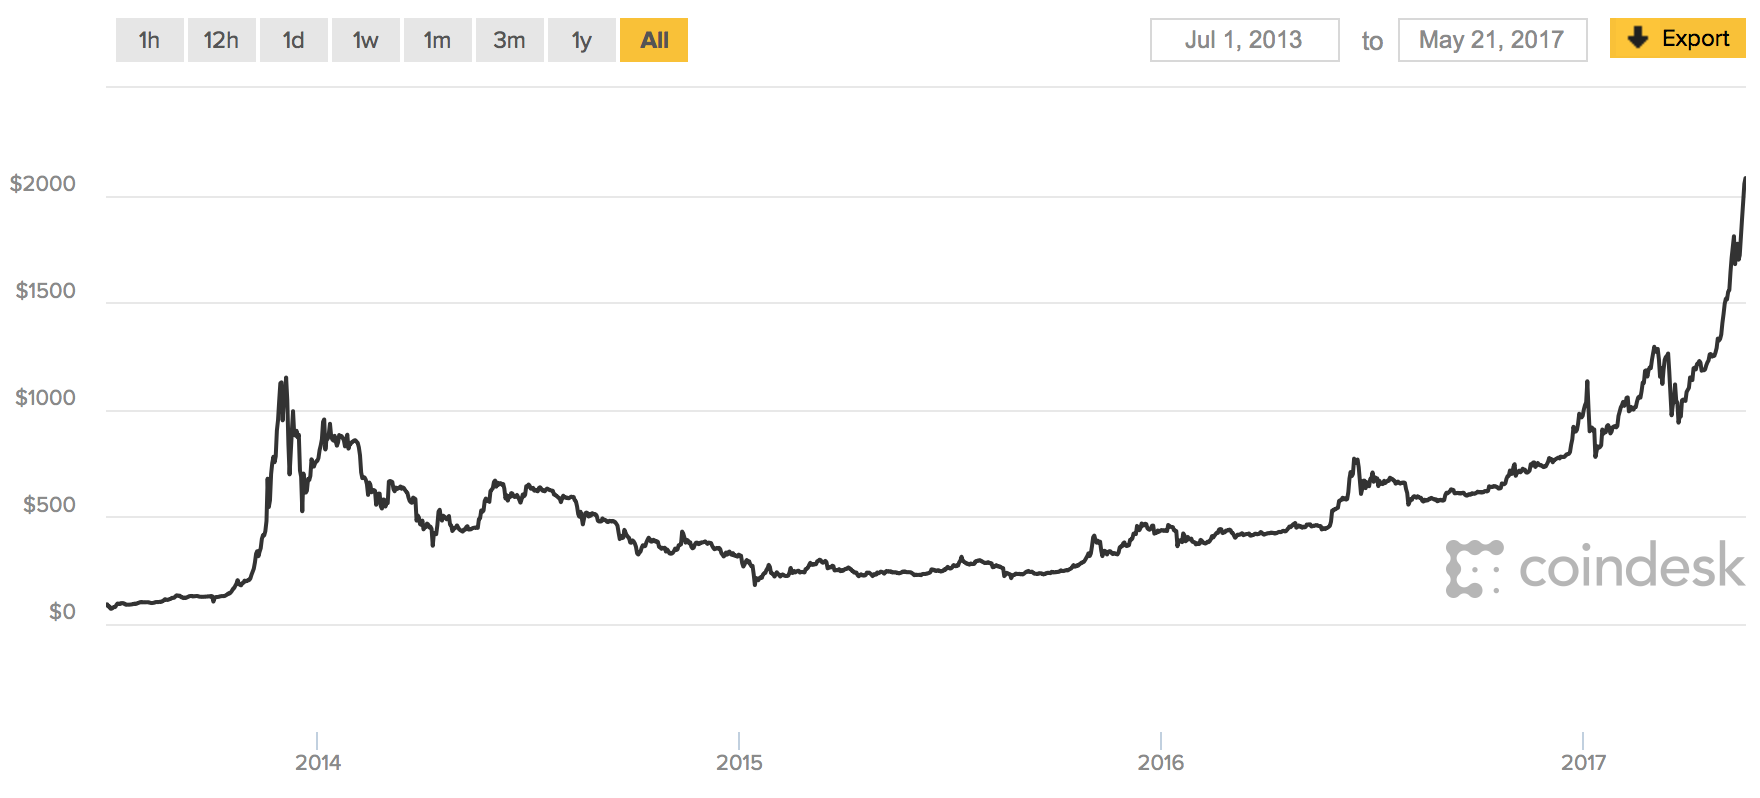 how much were bitcoins in 2000